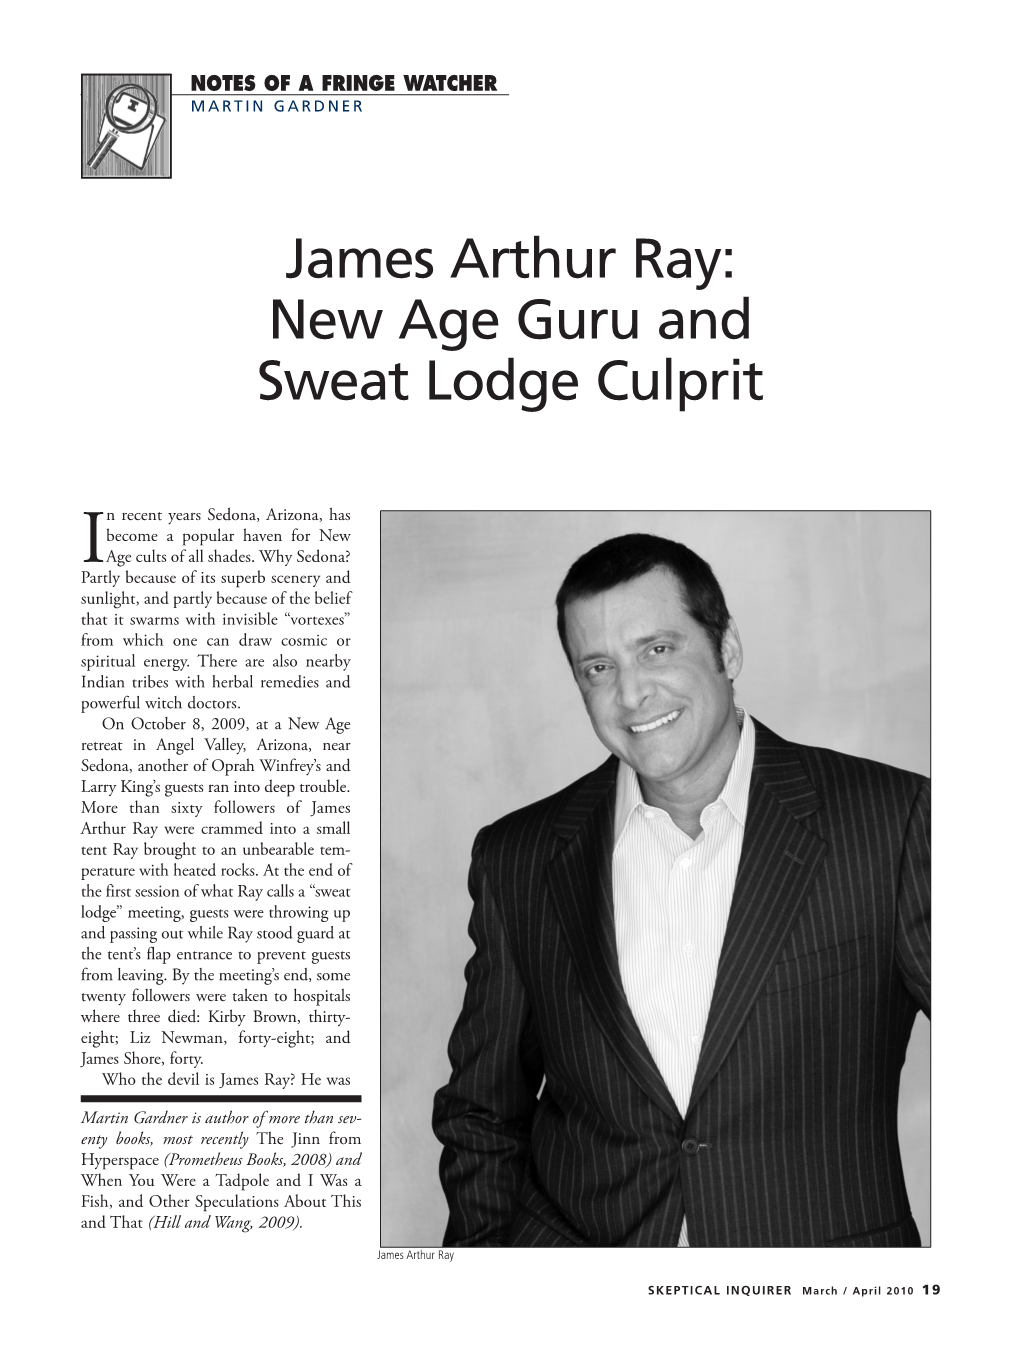 James Arthur Ray: New Age Guru and Sweat Lodge Culprit